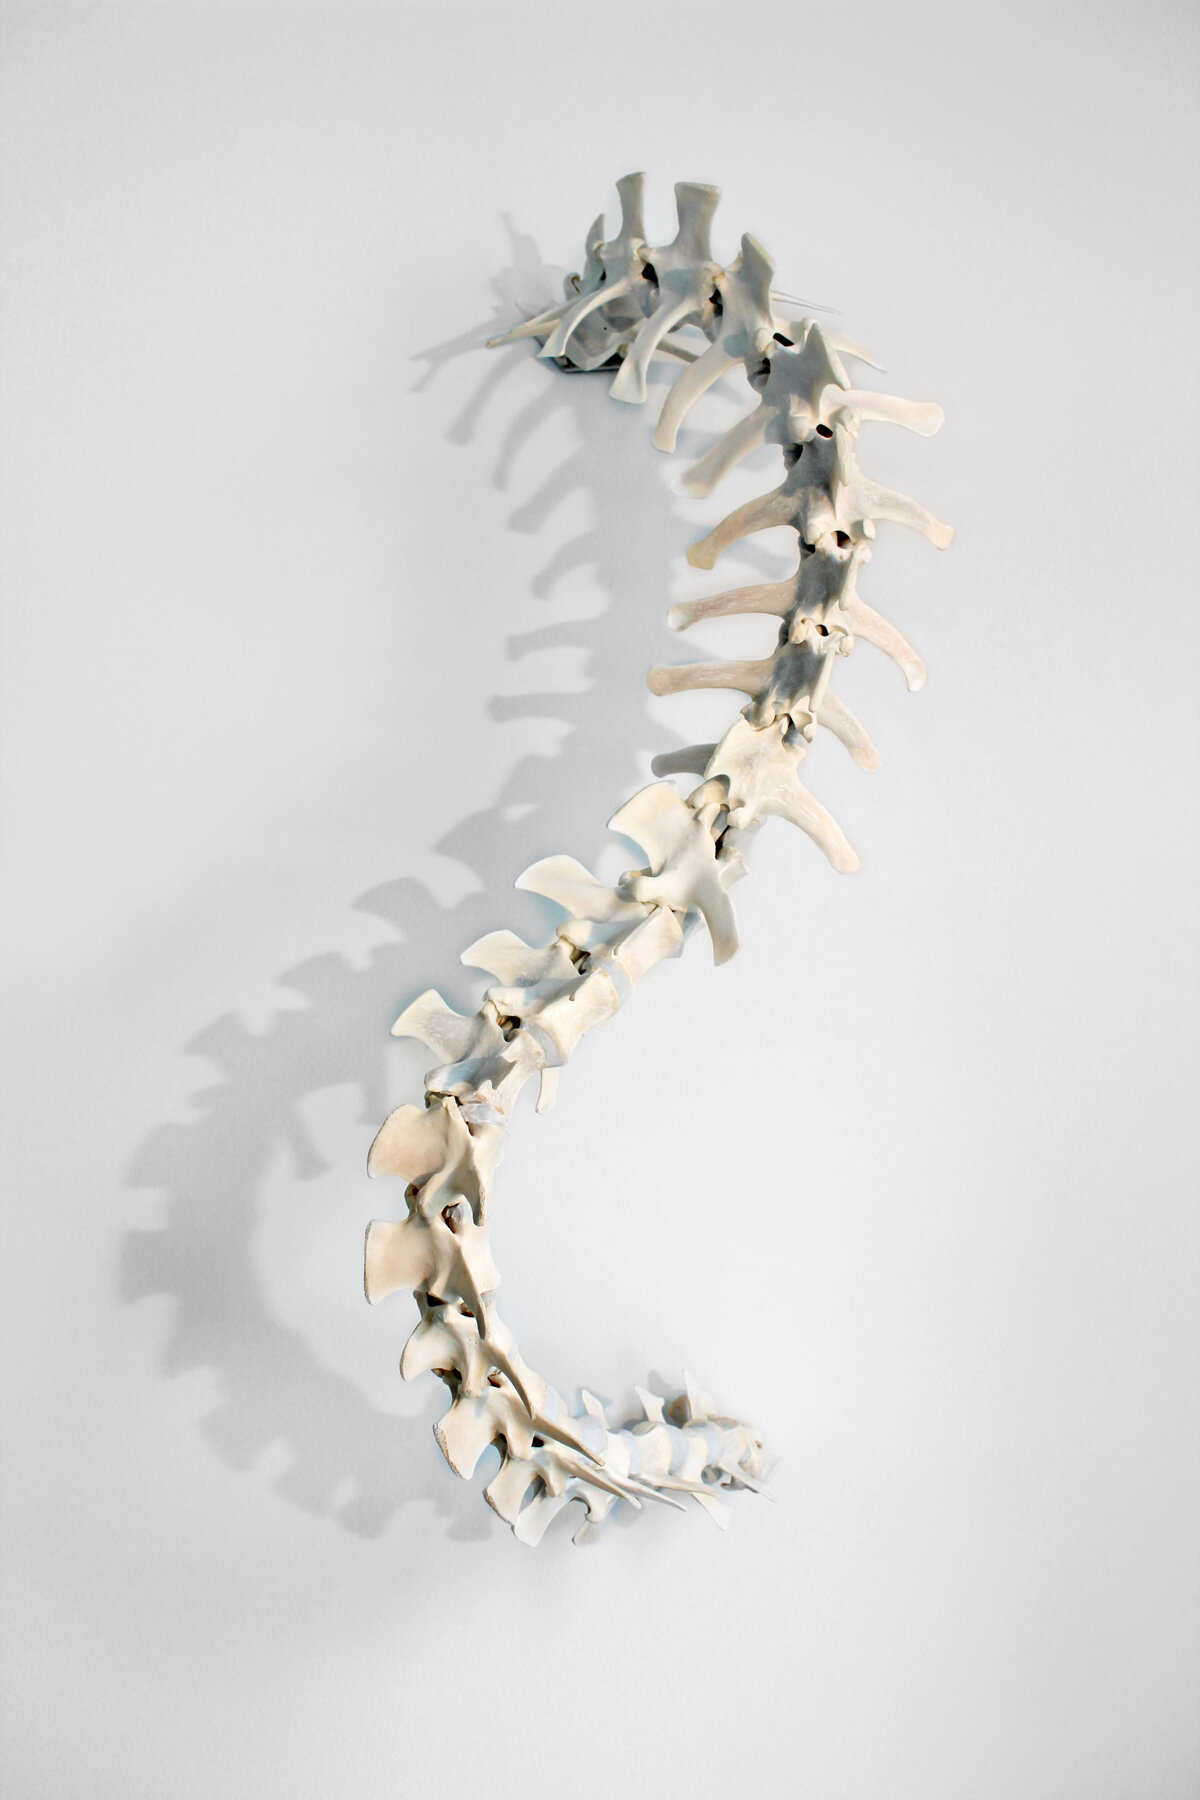    Emanation    deer vertebrae, sacrum and mixed-media, 28 x 11 x 12.5 inches 